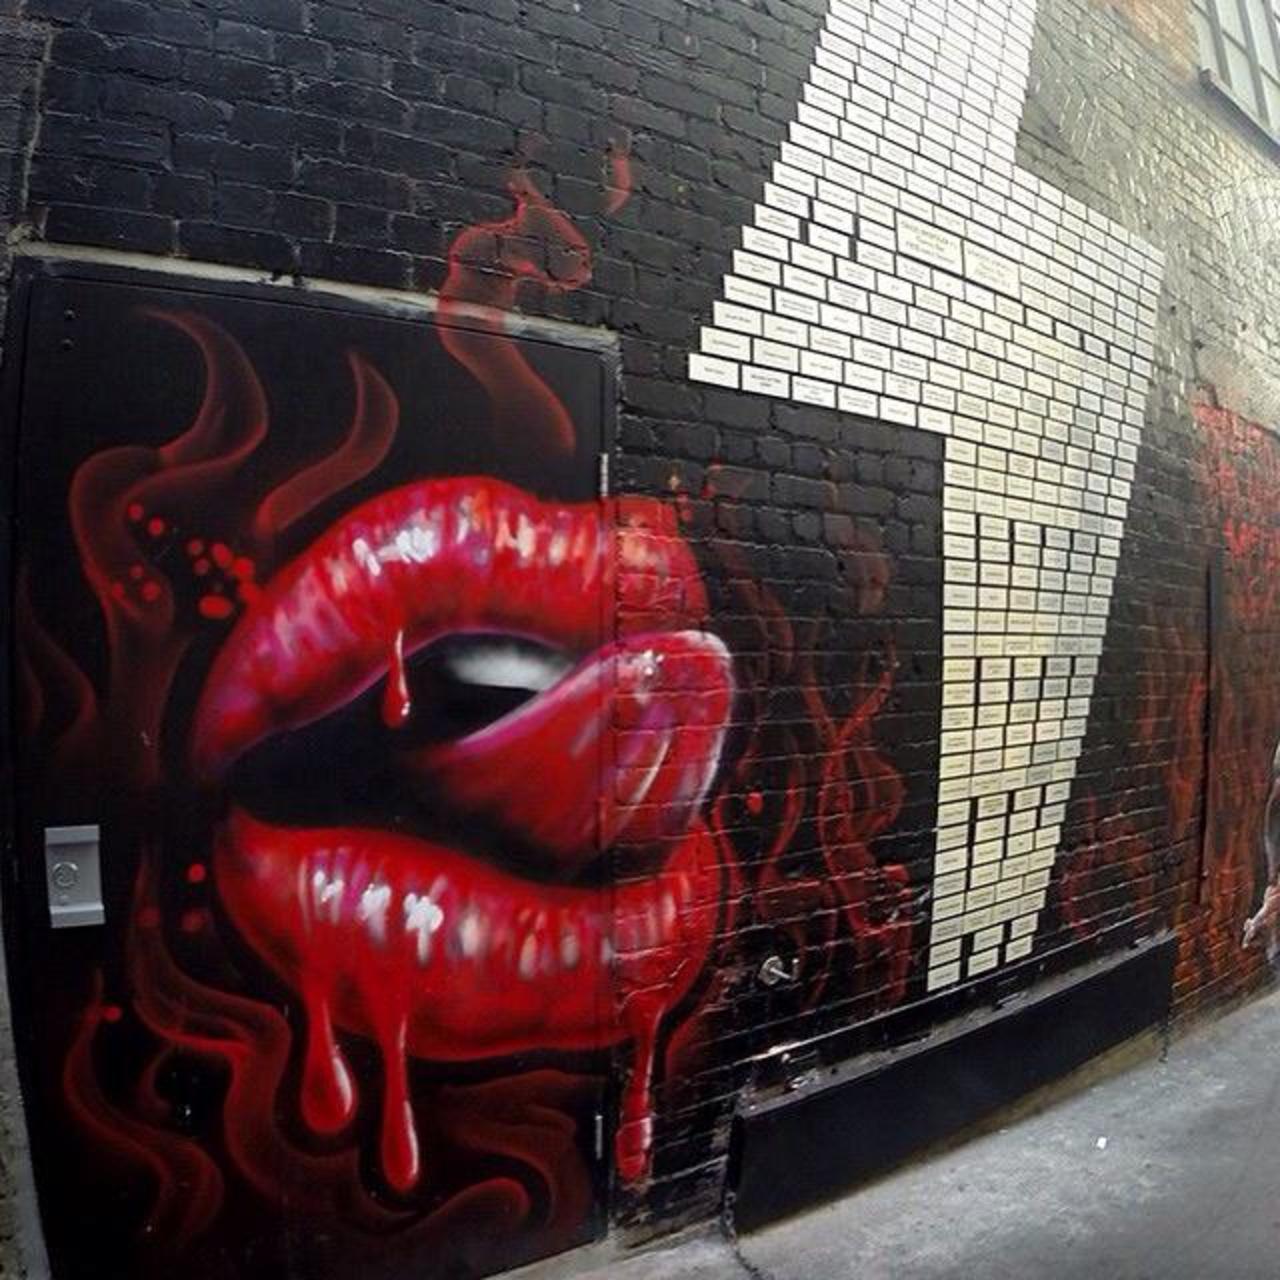 Latest Street Art by MikeMaka 

#art #arte #graffiti #streetart http://t.co/Gzef4leEsU